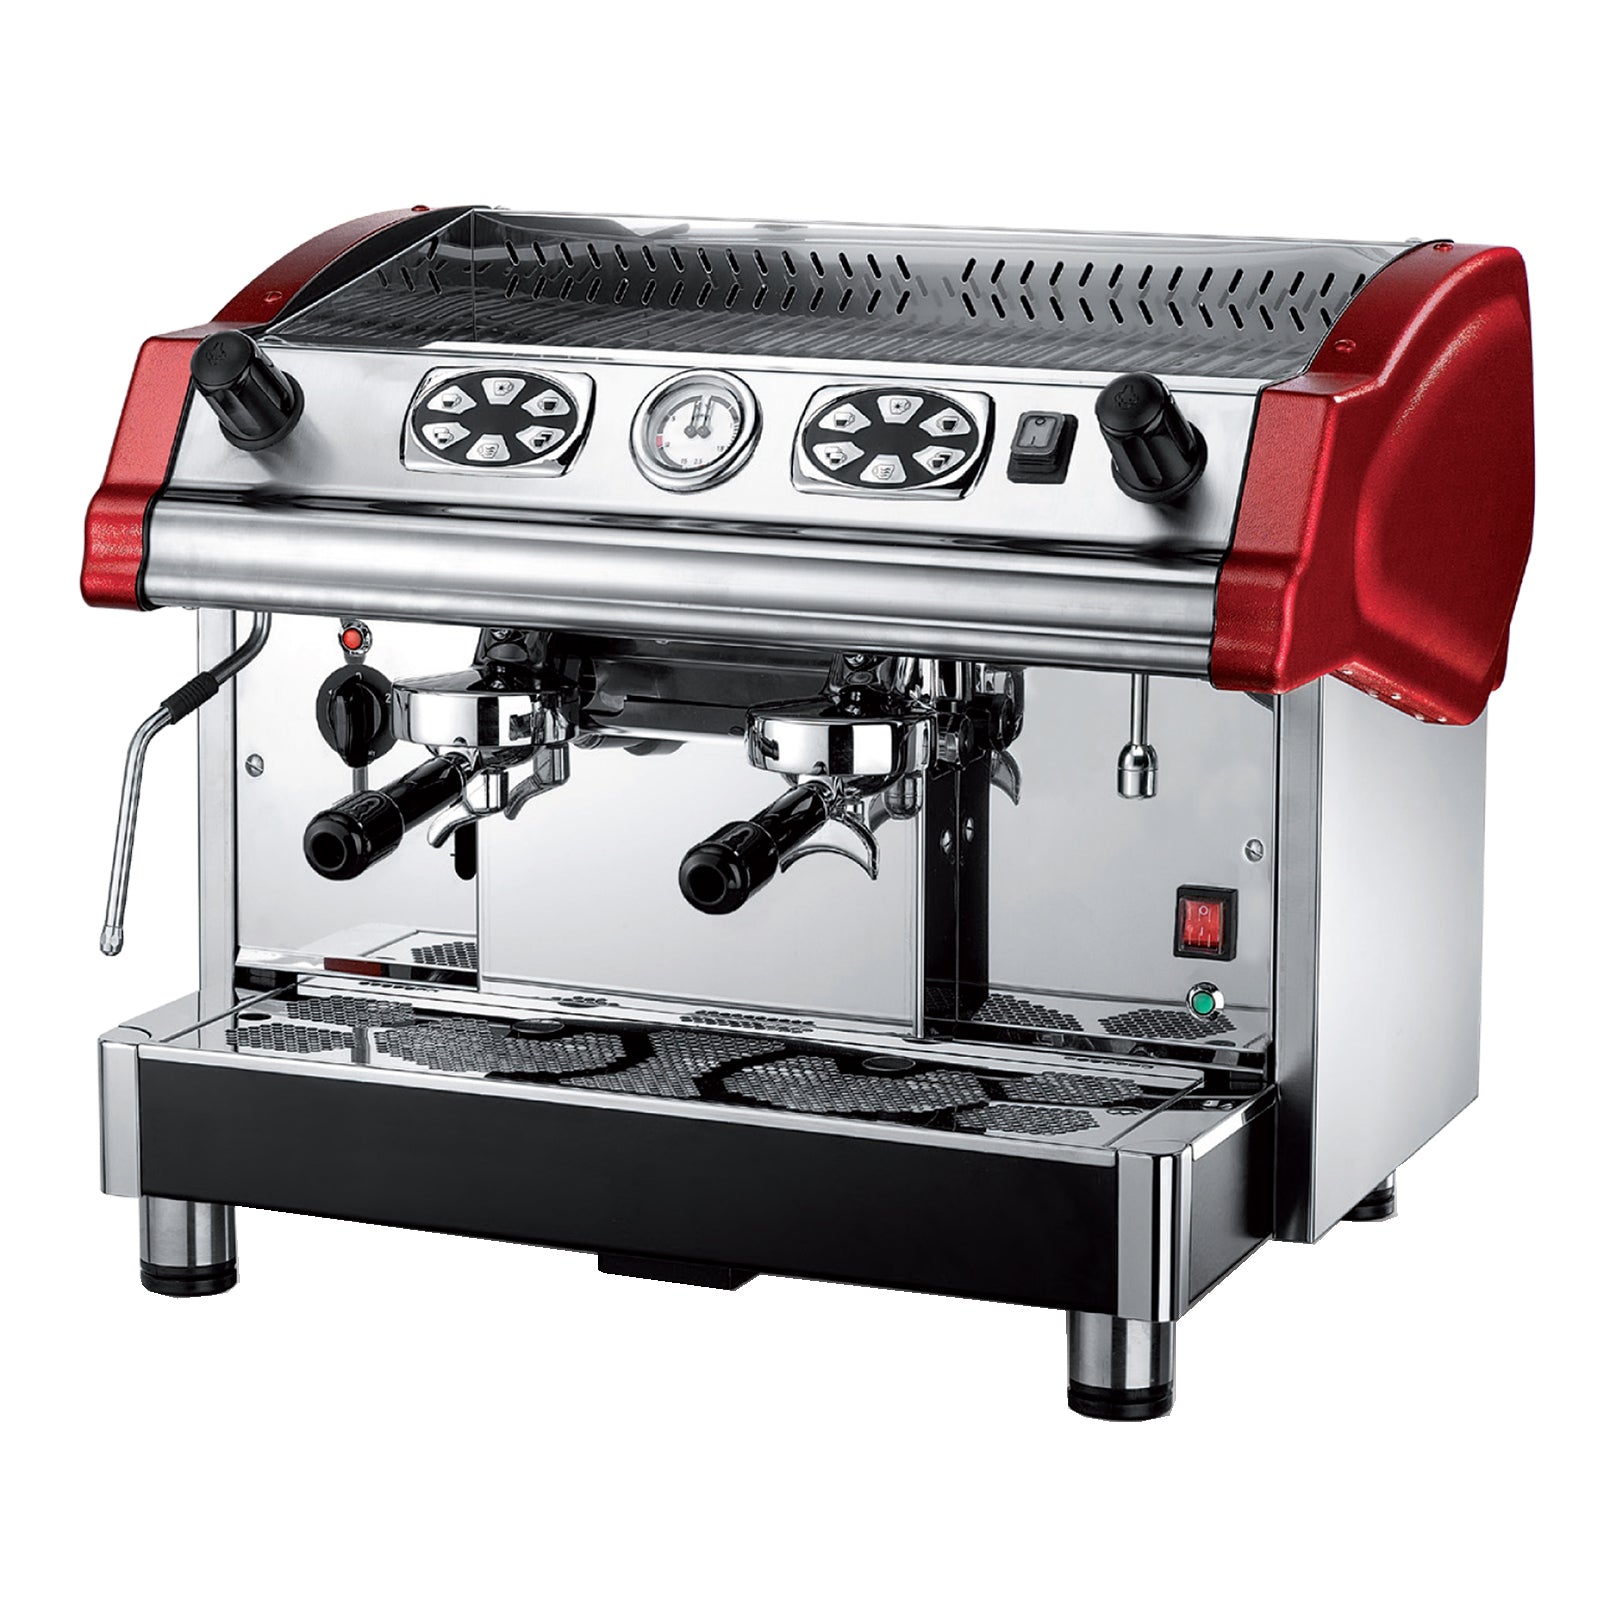 Avancini Pasta Extruder Machine - TR70, 8-10 Lbs Production Per